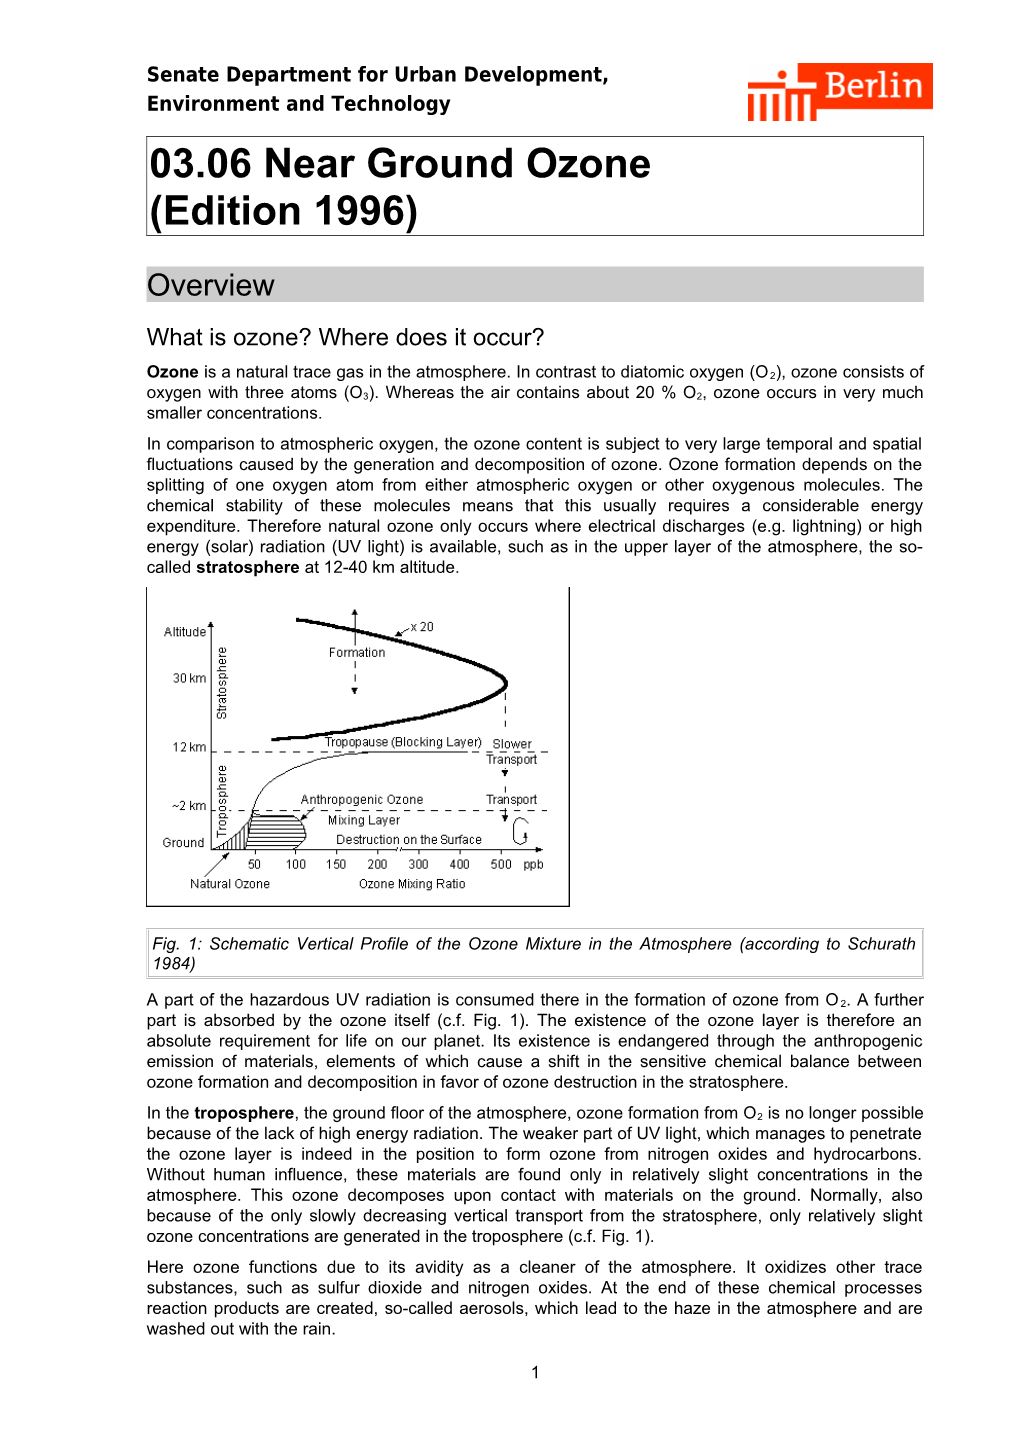 03.06 Near Ground Ozone (Edition 1996)